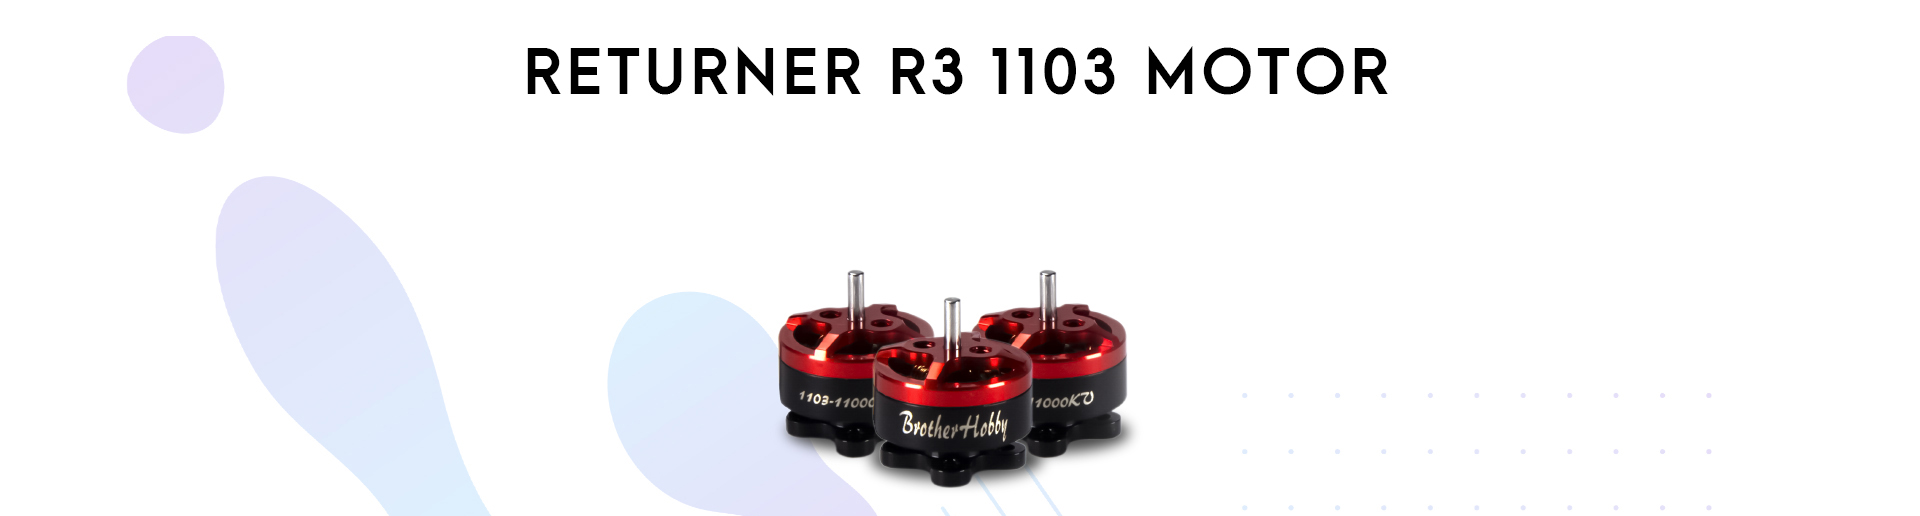 Returner R3 1103 Motor